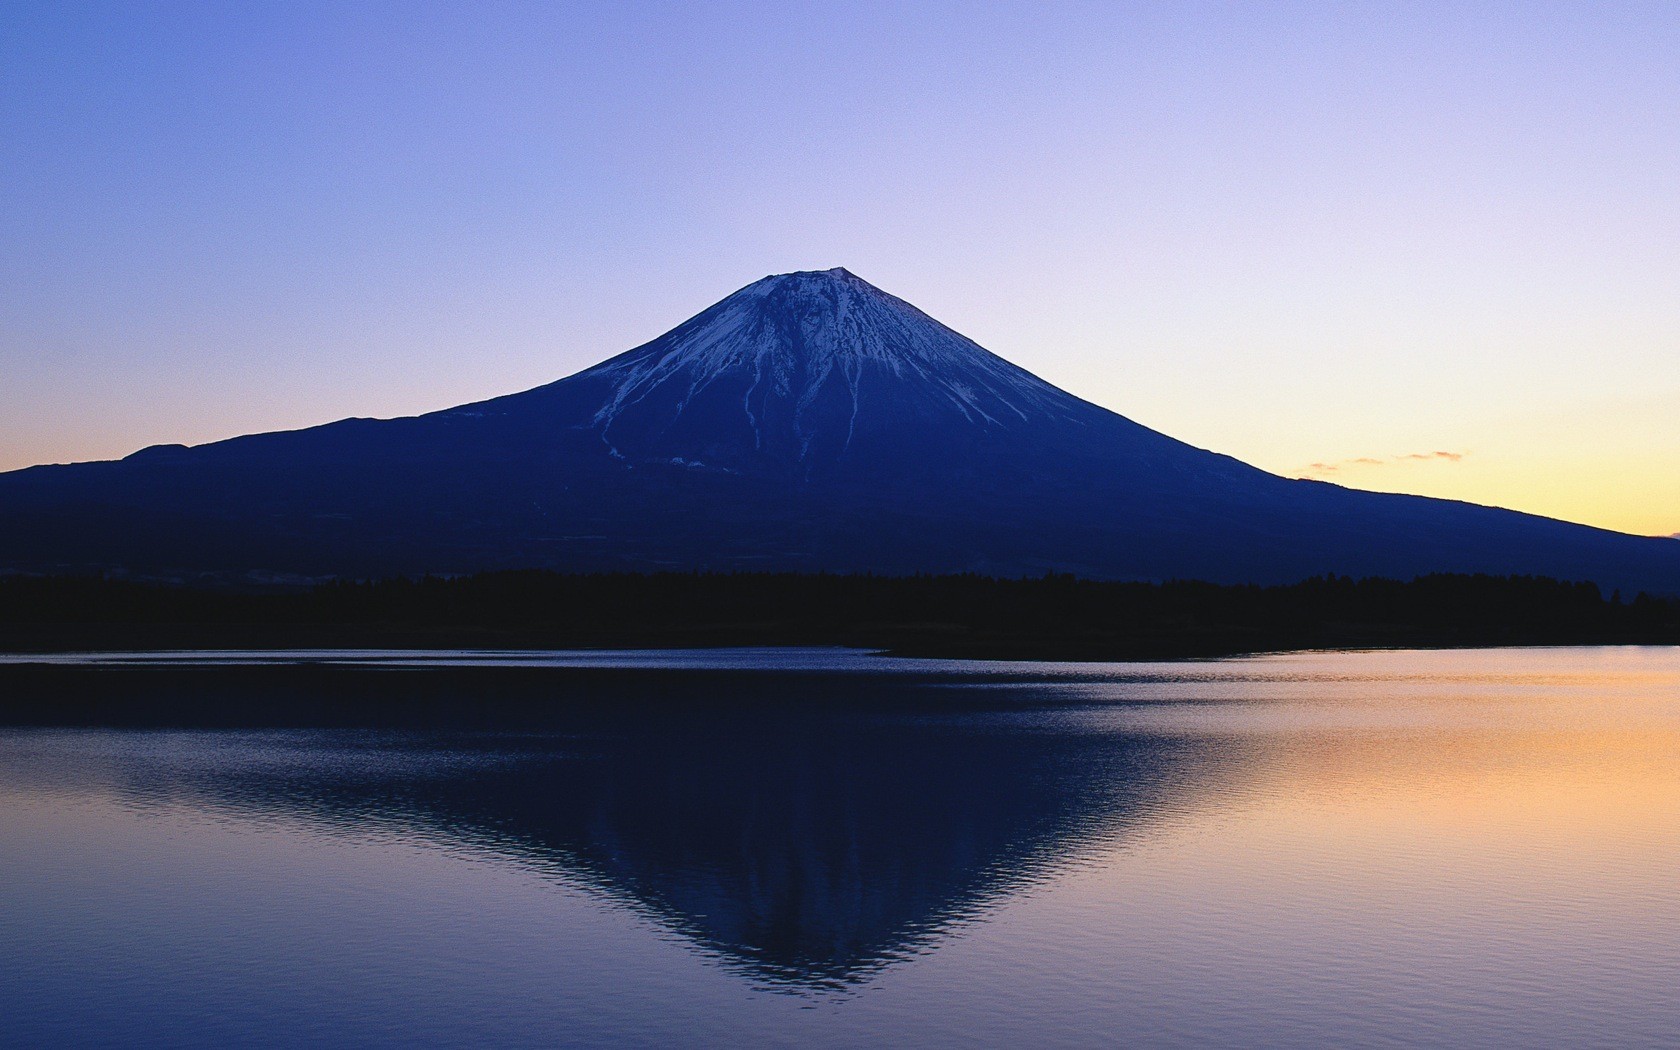 General 1680x1050 Mount Fuji landscape Japan volcano reflection